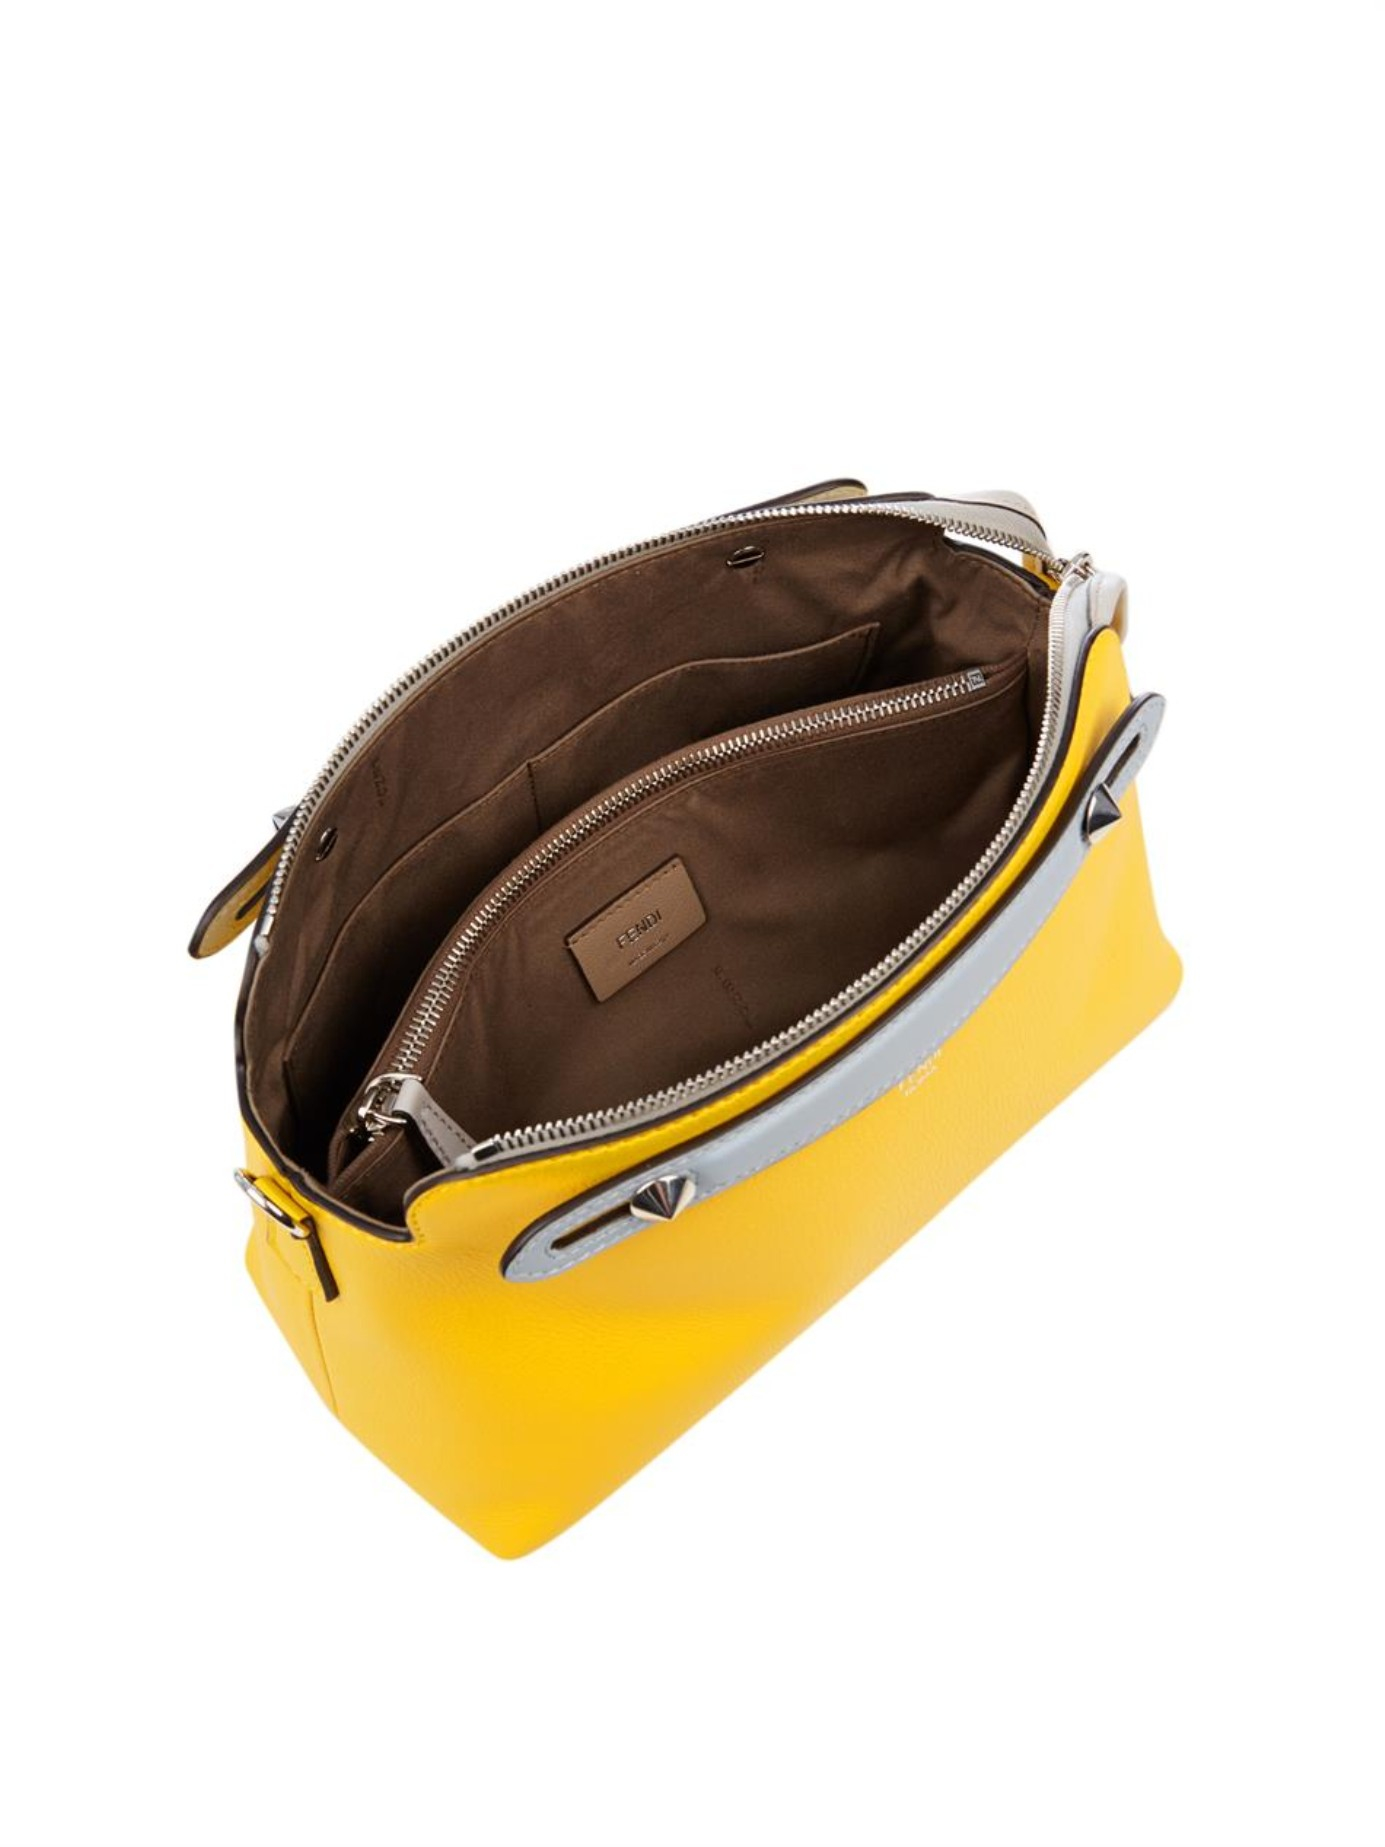 Fendi Fendista Pochette Mama Chain Flap 239783 Mustard Yellow Leather Cross  Body Bag, Fendi